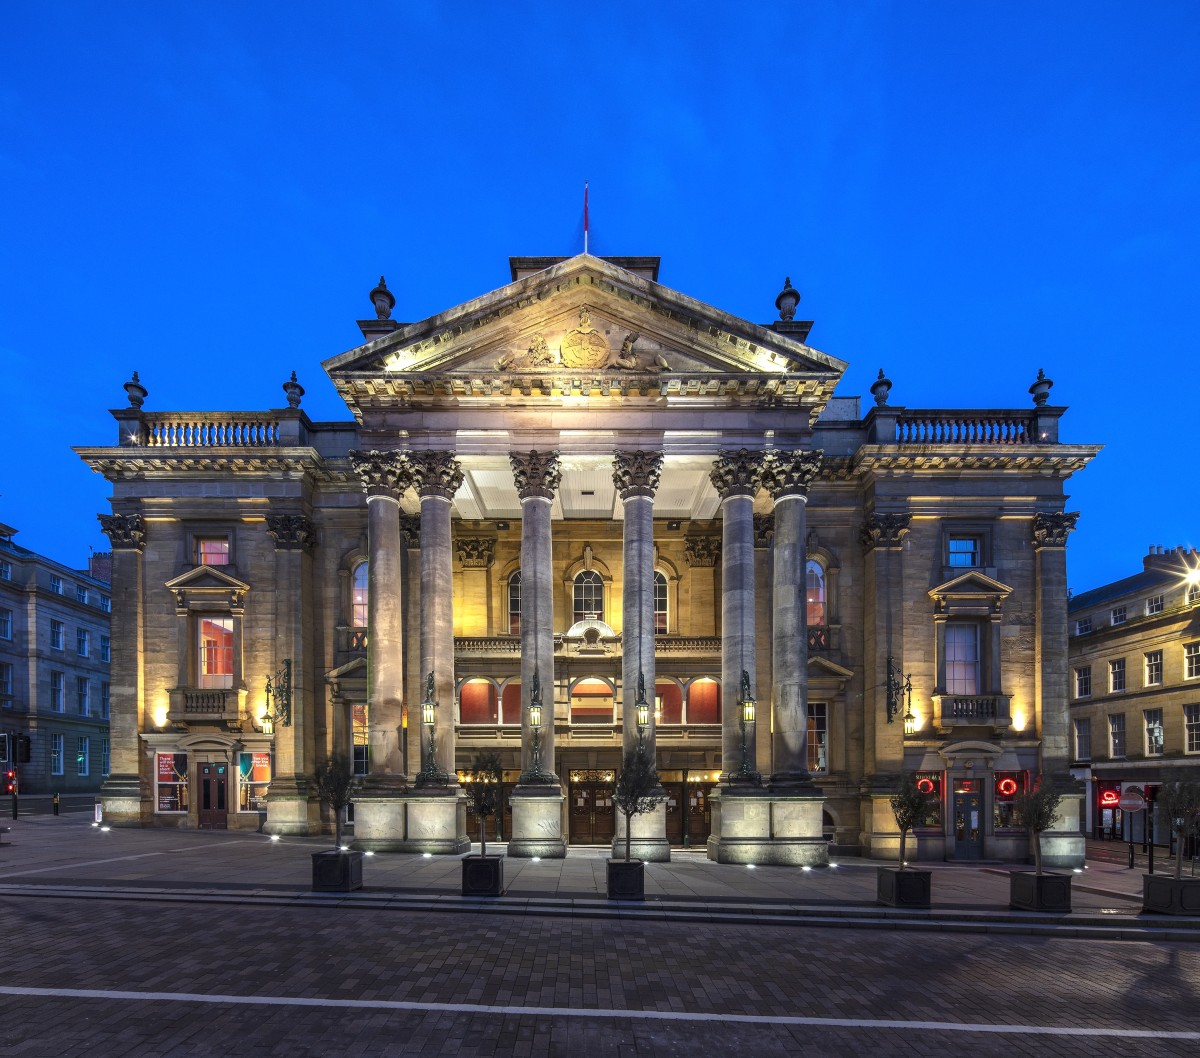 Theatre Royal (Image: Graeme Peacock)